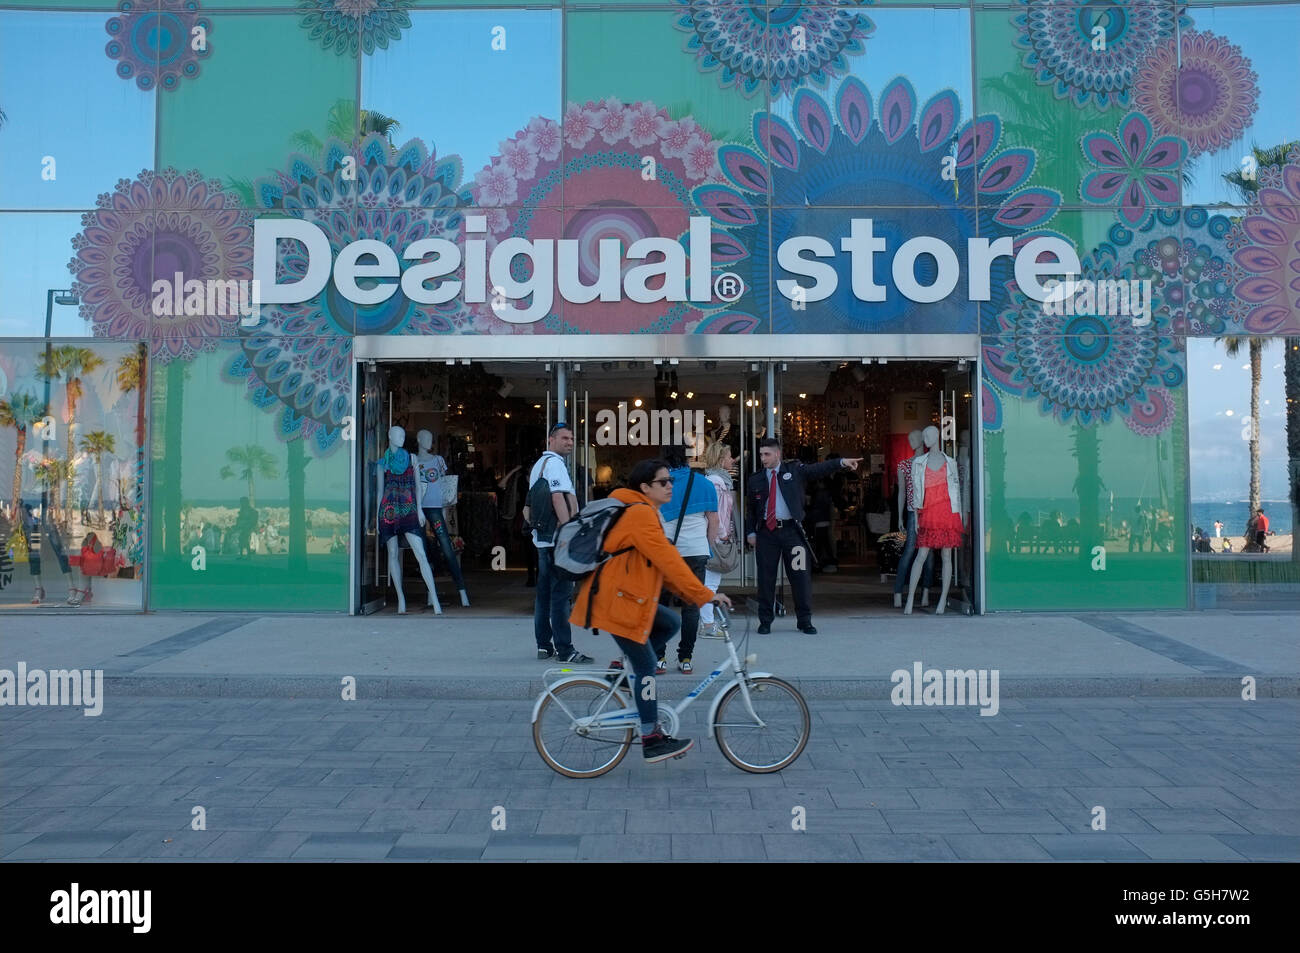 Desigual store / Hauptsitz in Barceloneta, Barcelona, Spanien  Stockfotografie - Alamy